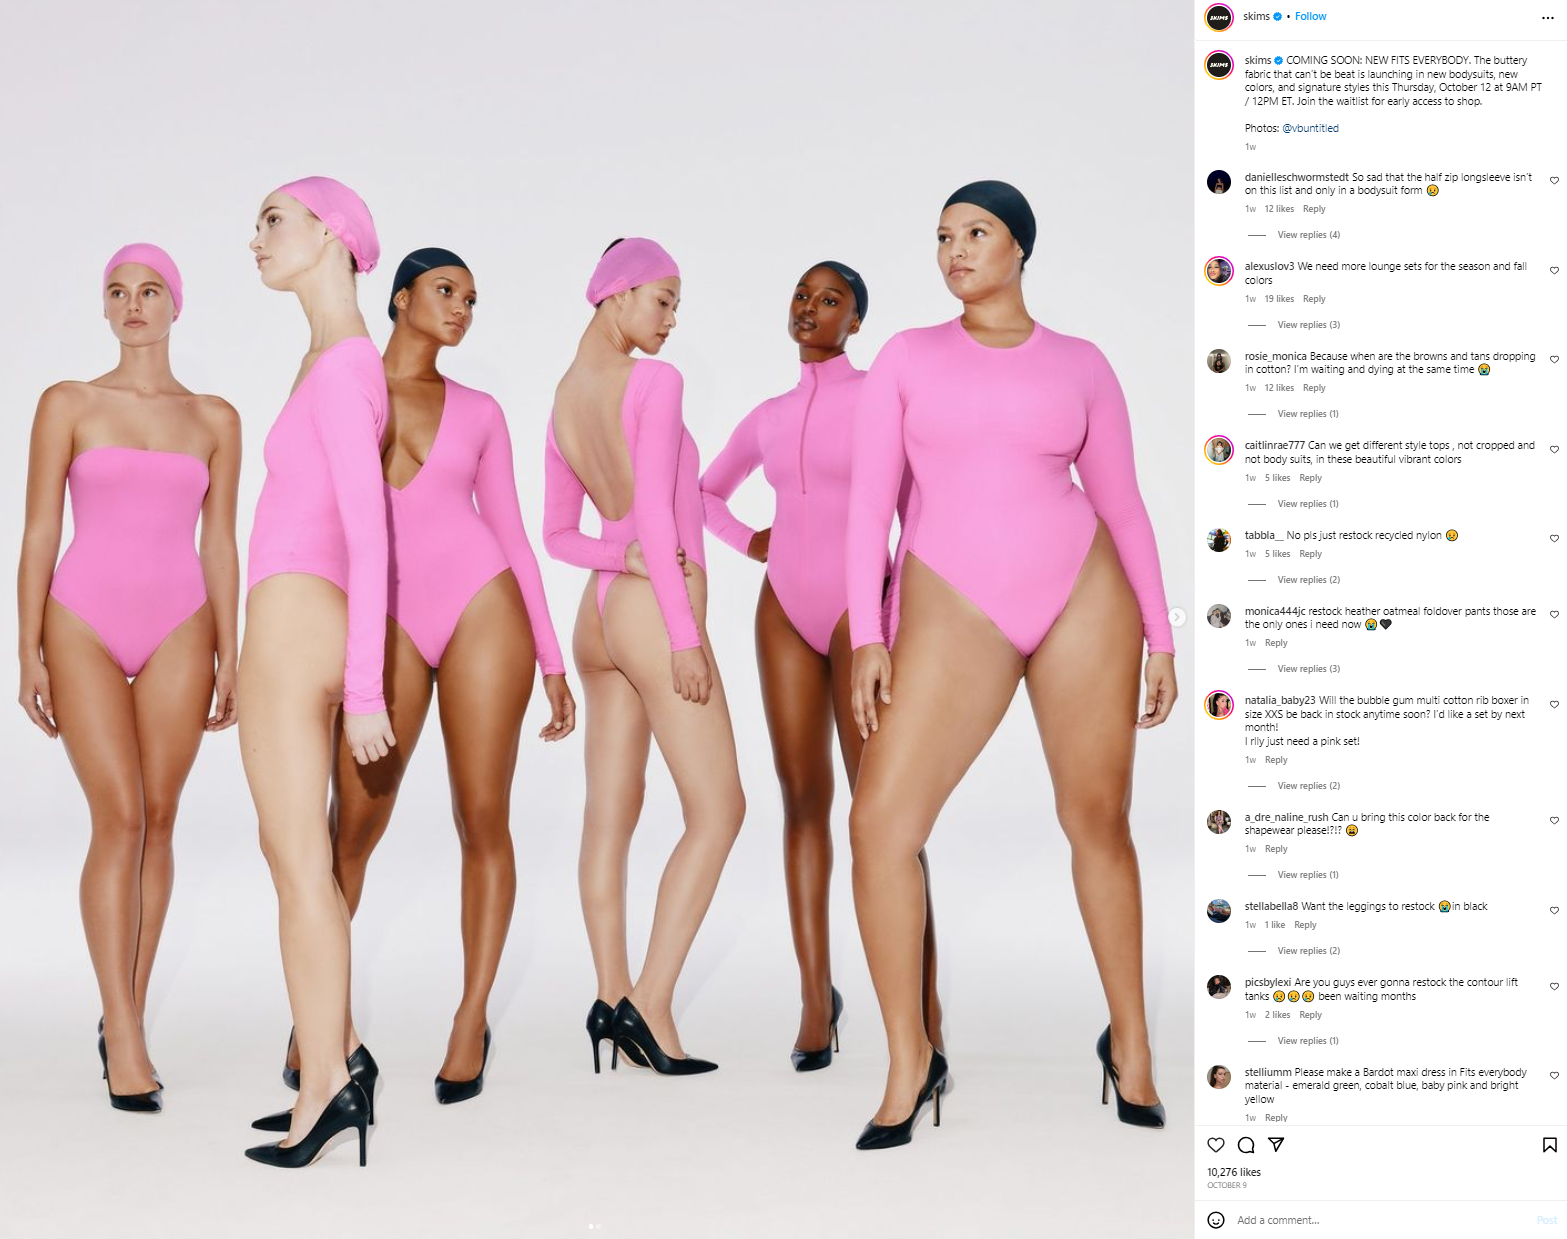 Kim Kardashian thinks her SKIMS shapewear line will be her billion